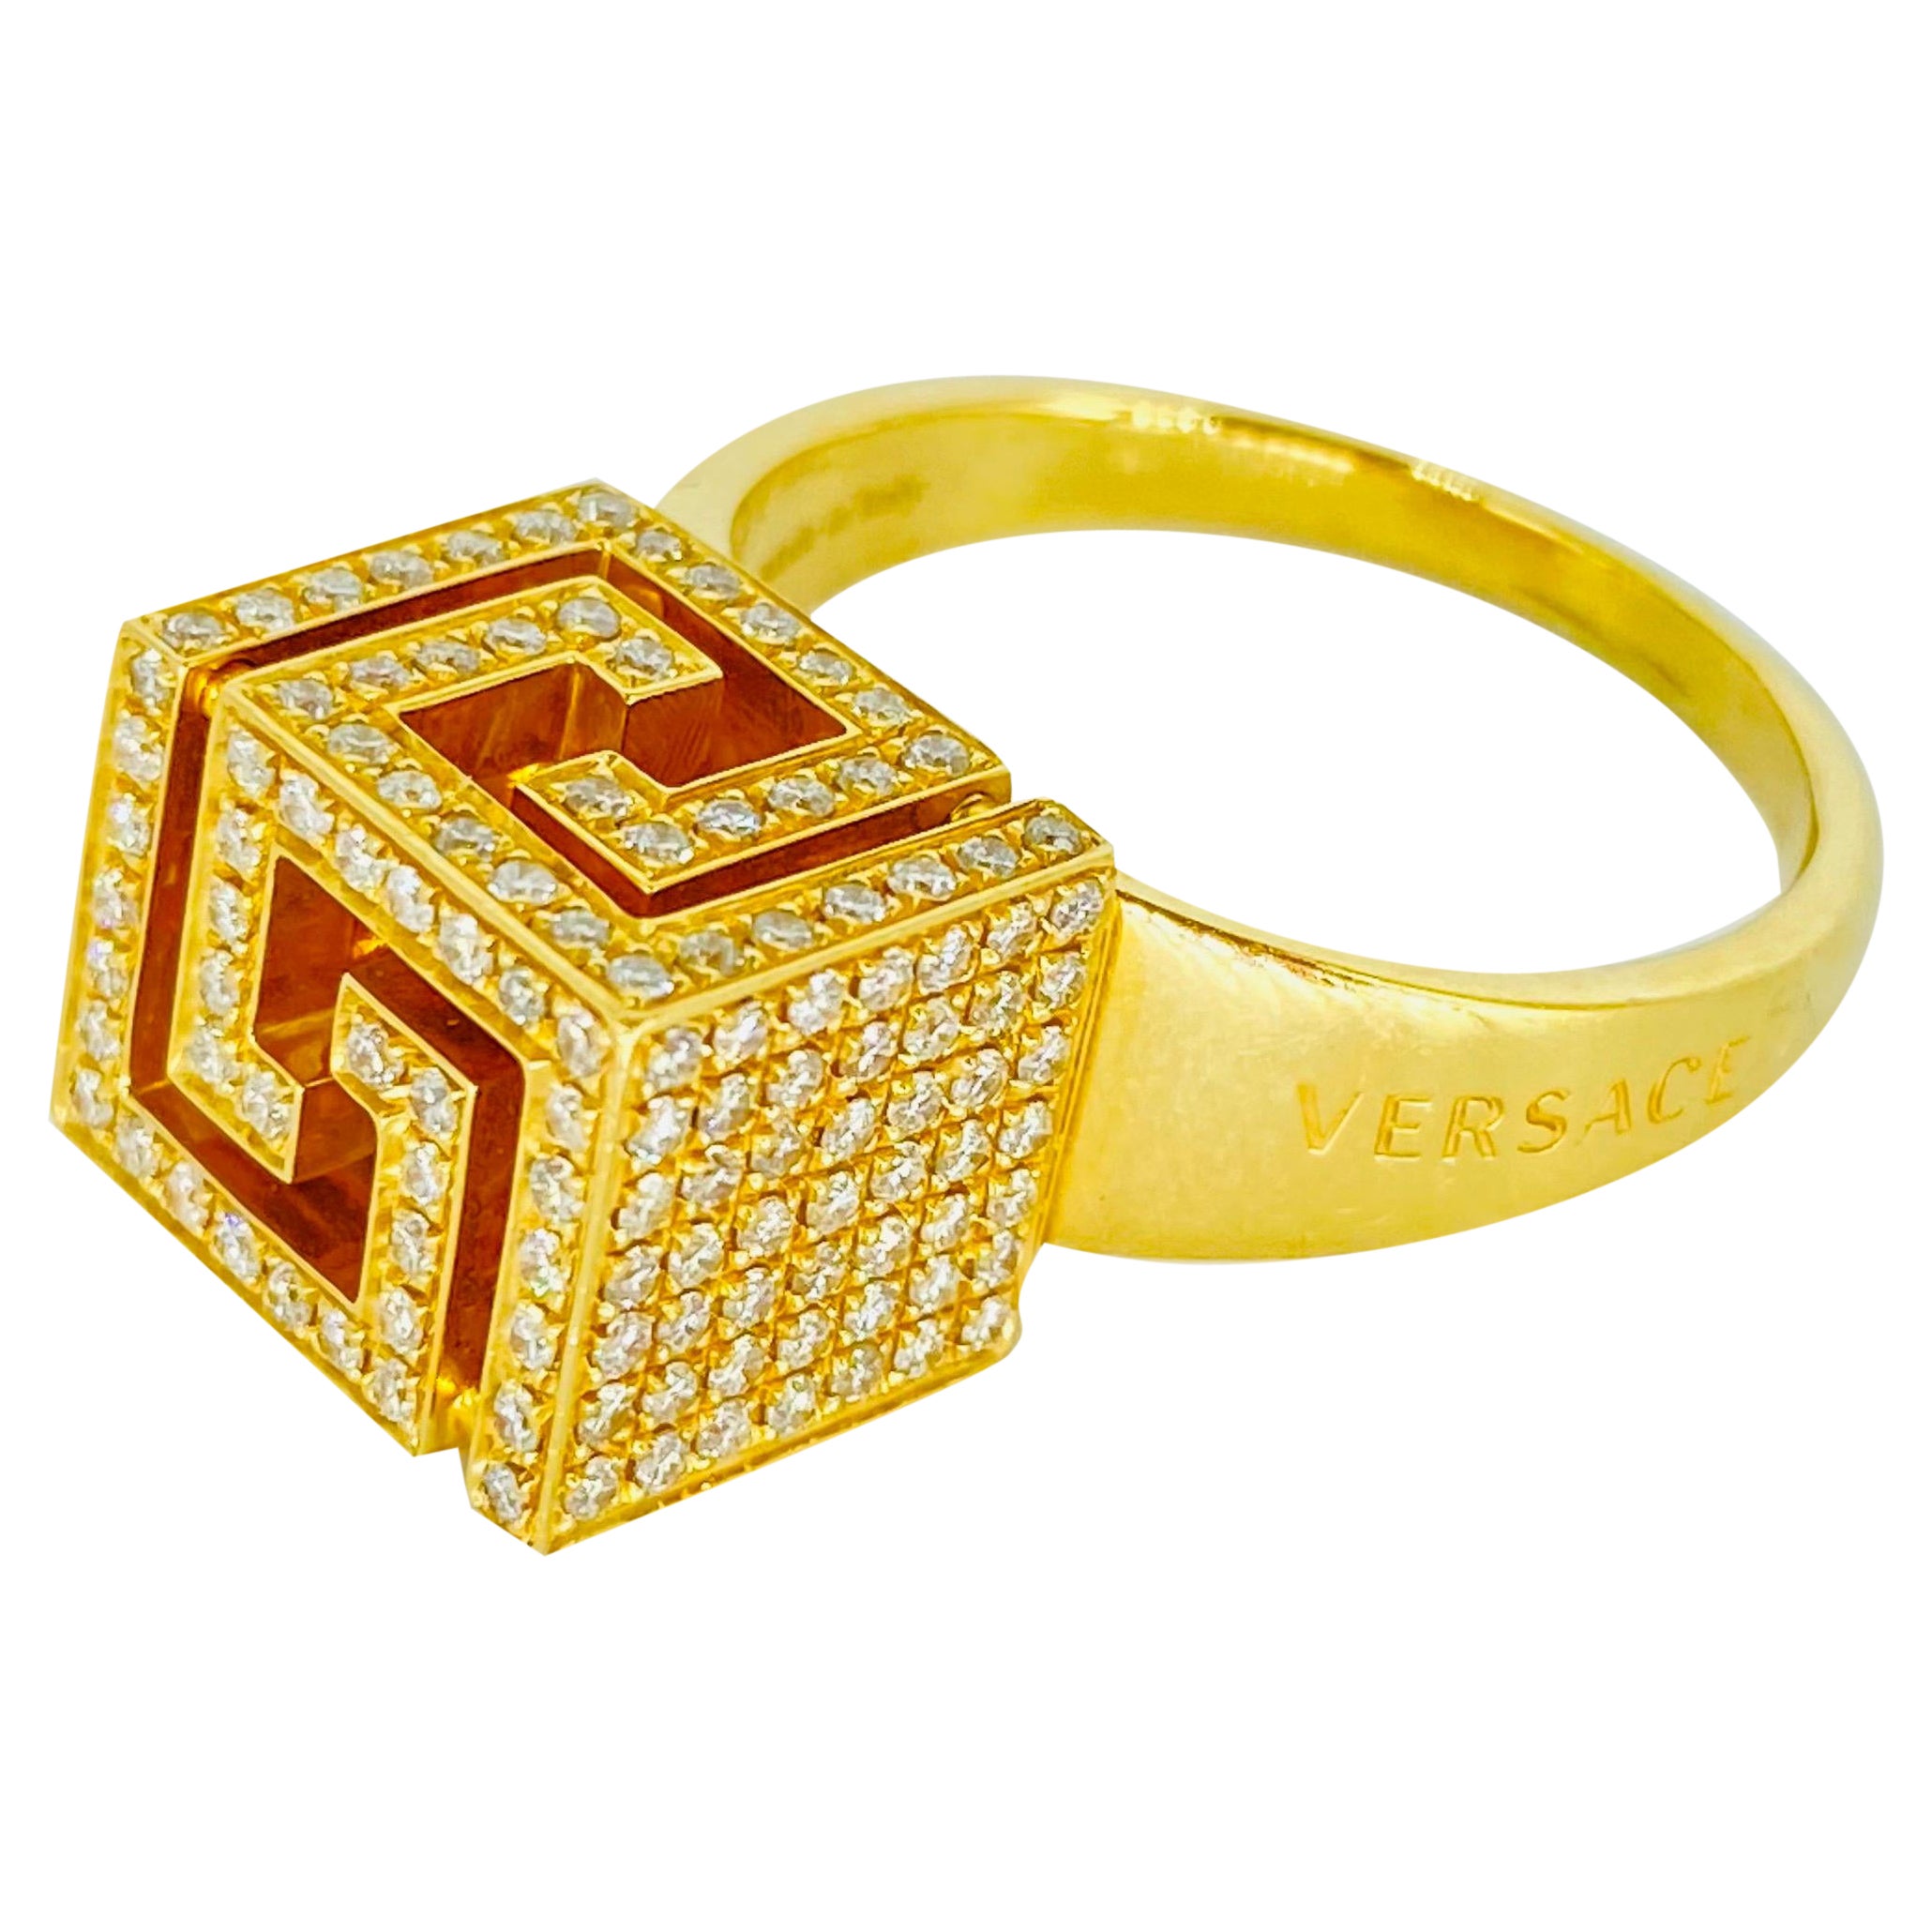 Versace Fine Jewelry Greek Key Cube VVS Diamond Engagement Ring For Sale